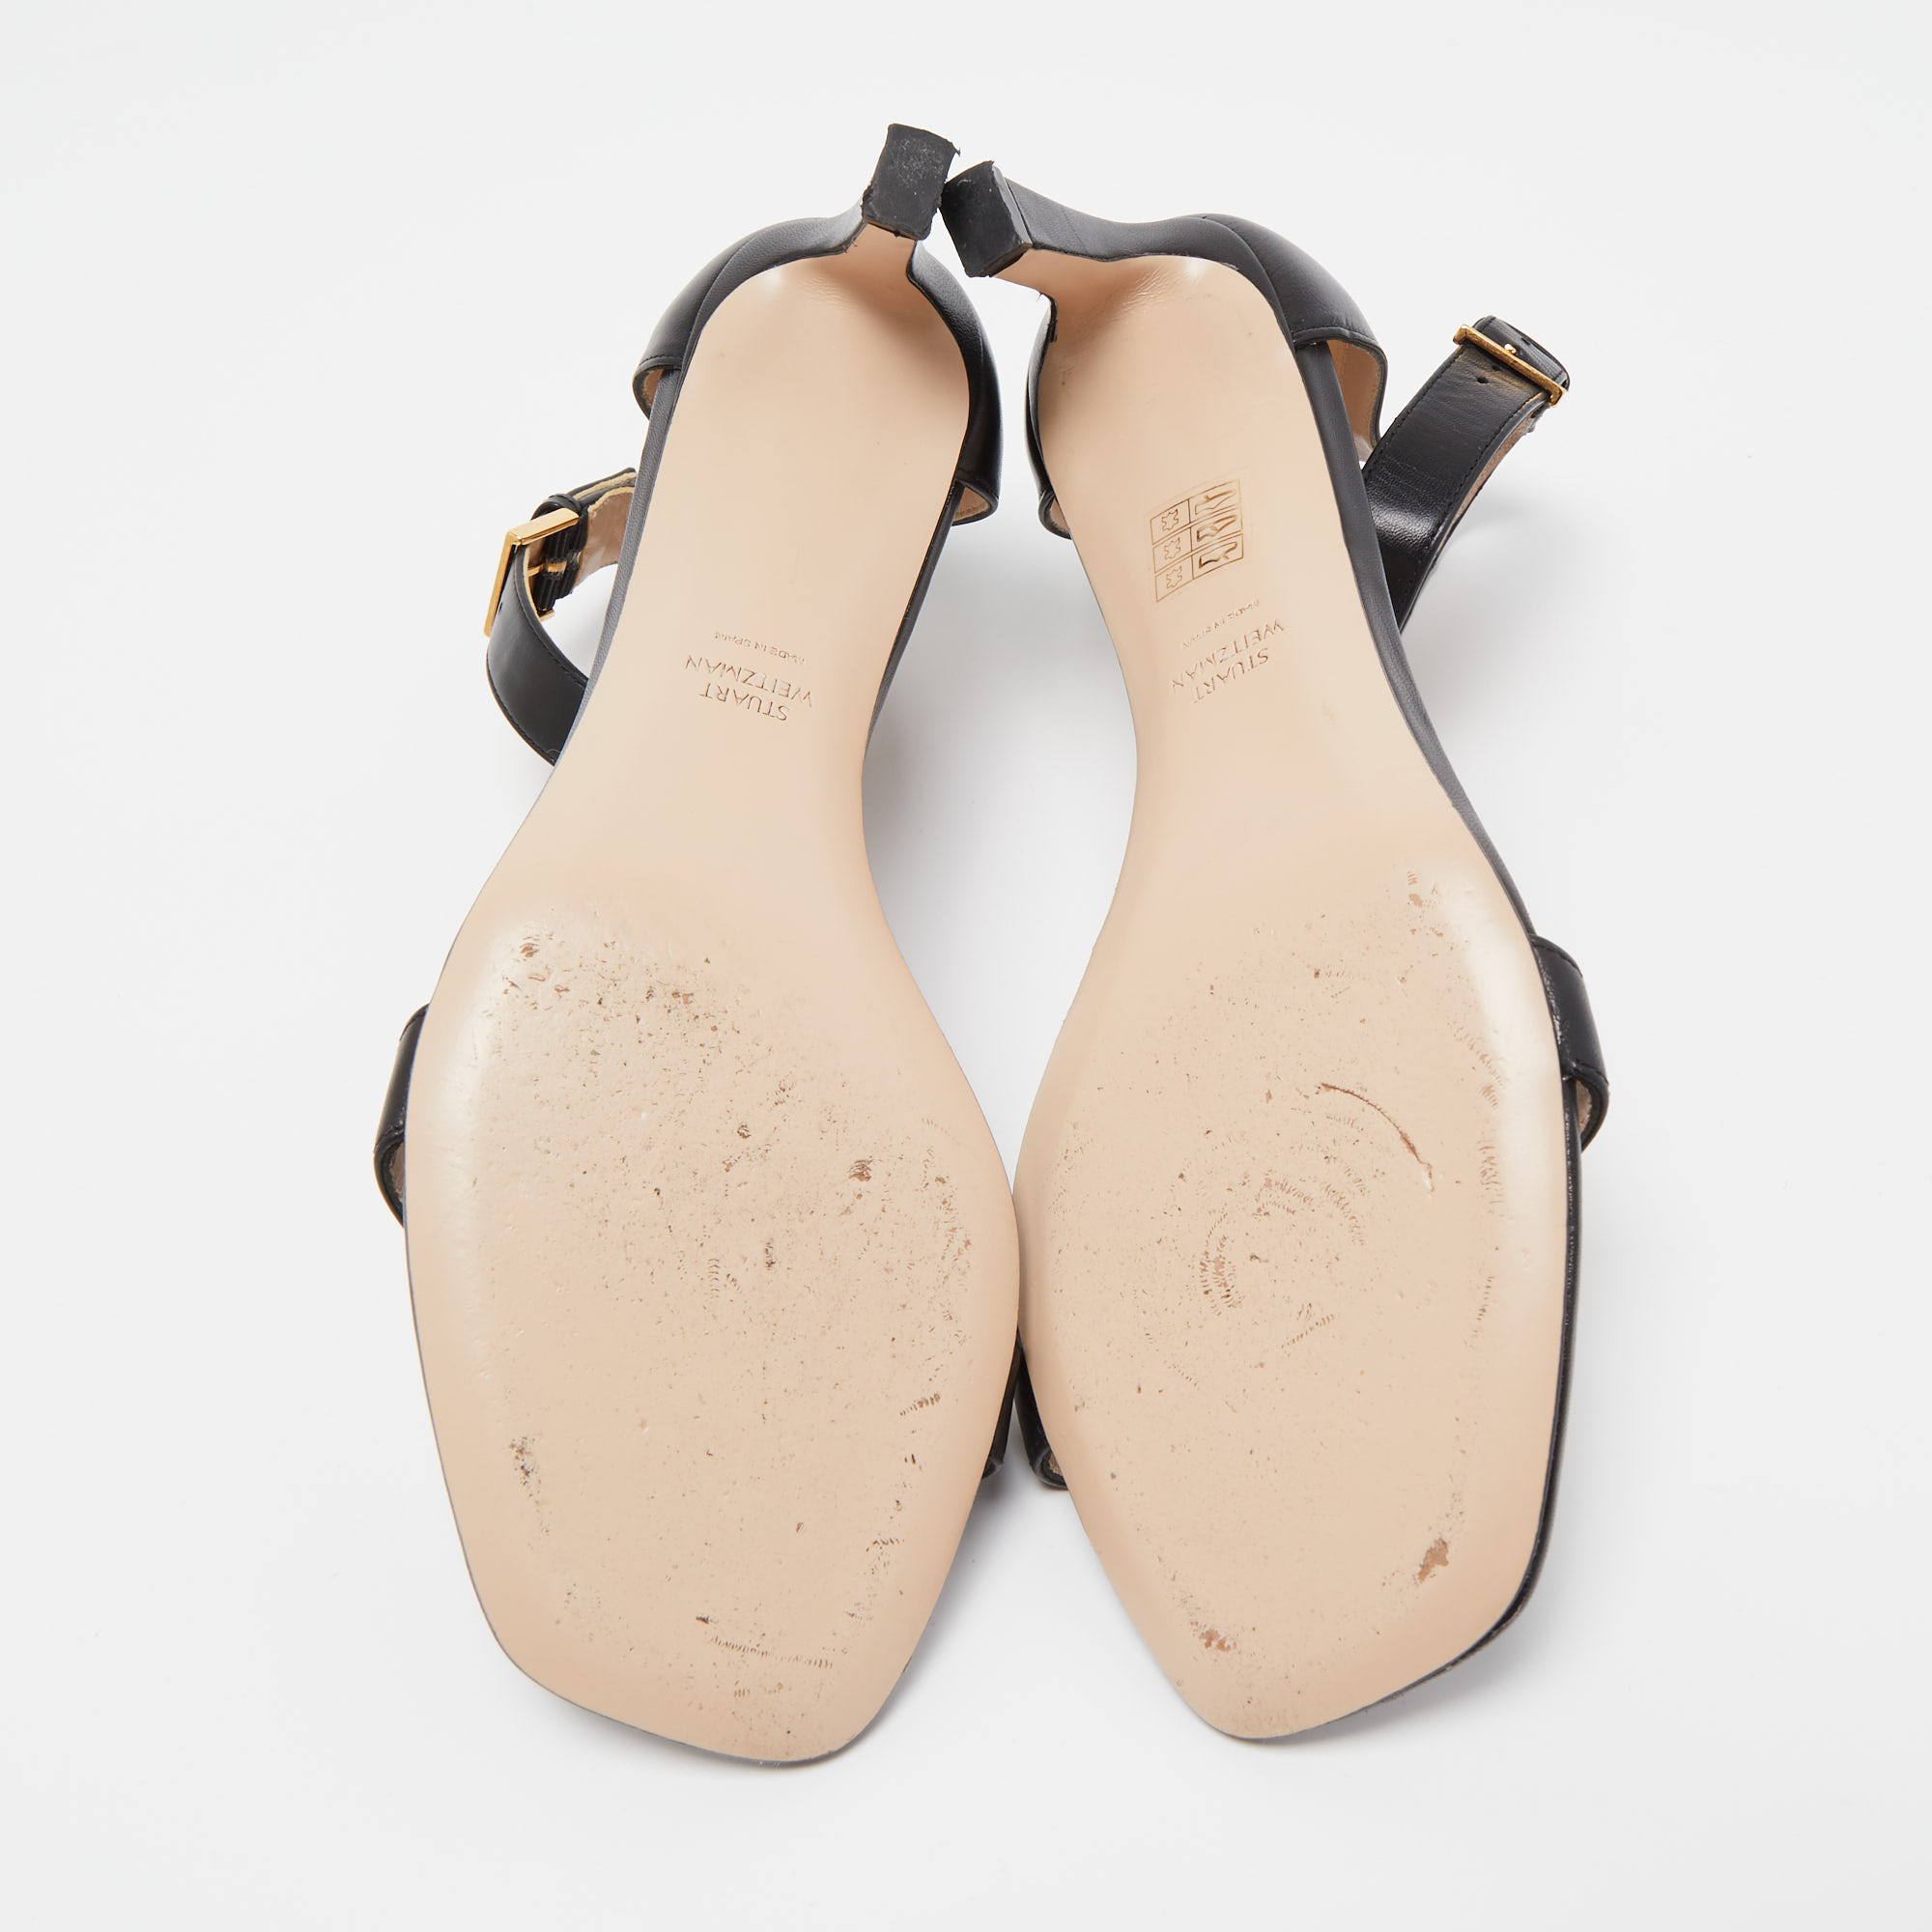 Stuart Weitzman Black Leather Ankle Strap Sandals Size 39.5